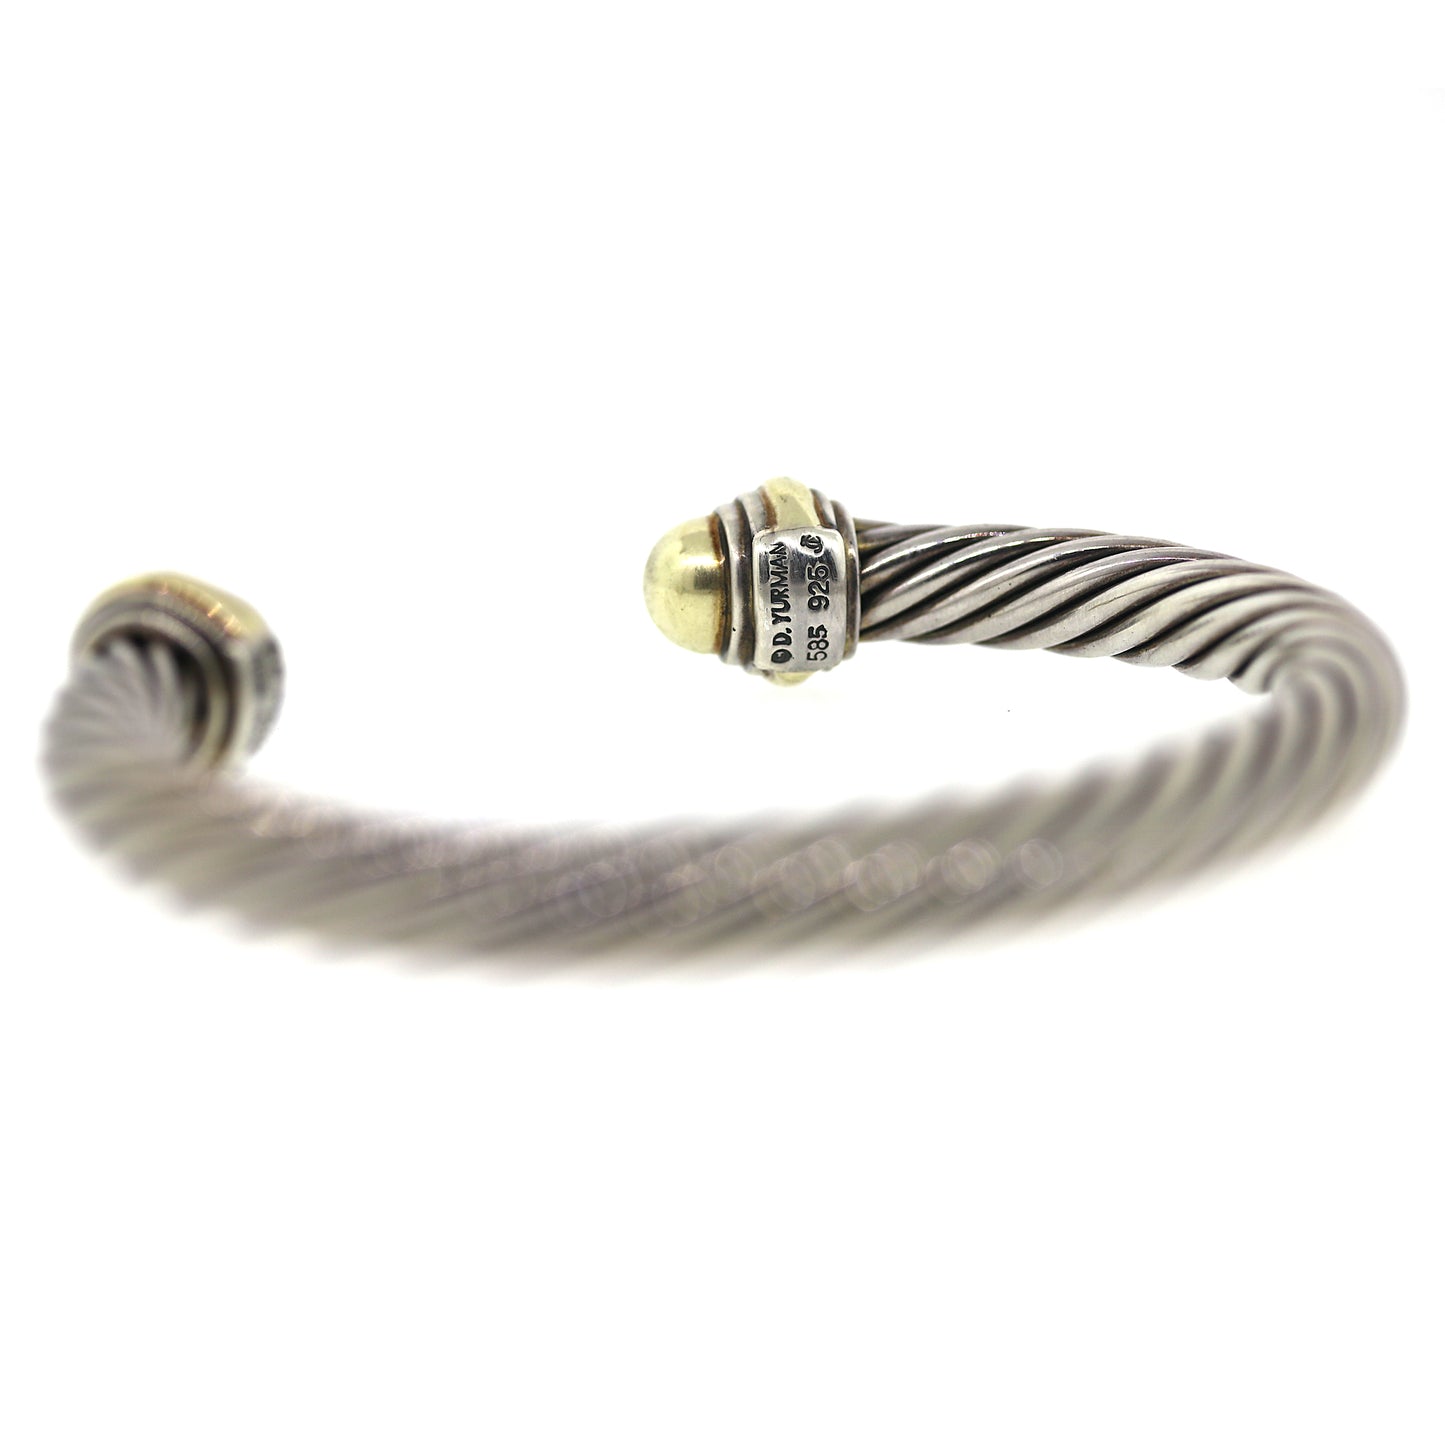 David Yurman Sterling Silver & 14K Gold Cable Cuff Bracelet